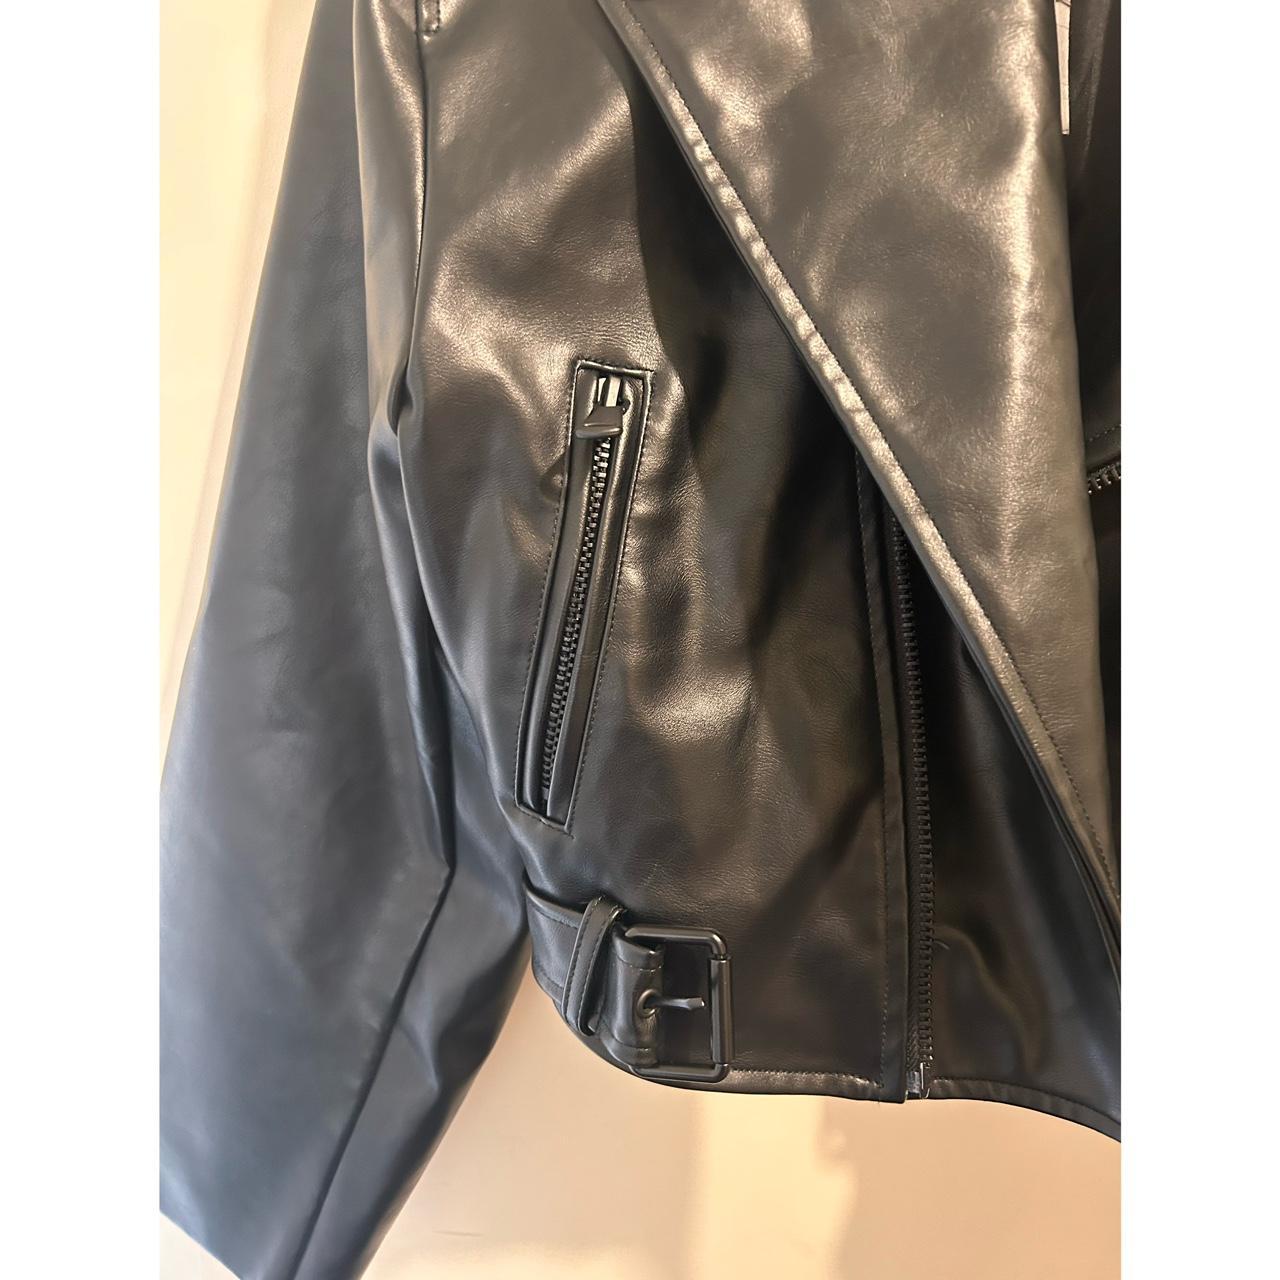 Lioness cropped faux leather jacket, Size XL (AU14),... - Depop